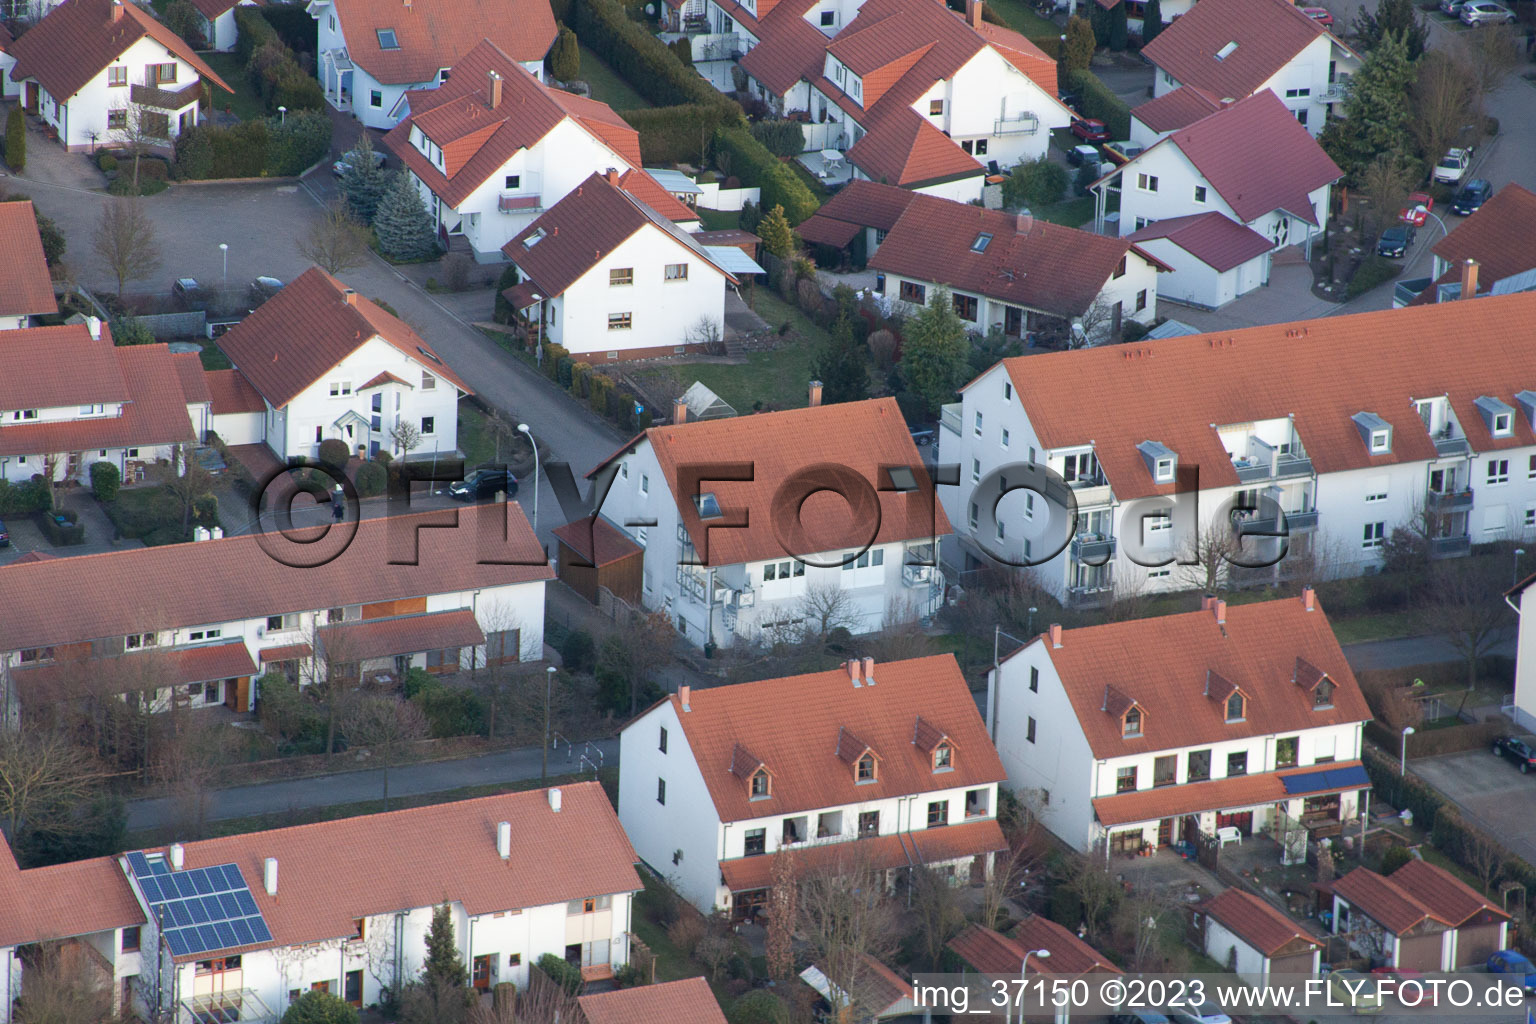 Aerial view of NW in the district Herxheim in Herxheim bei Landau/Pfalz in the state Rhineland-Palatinate, Germany